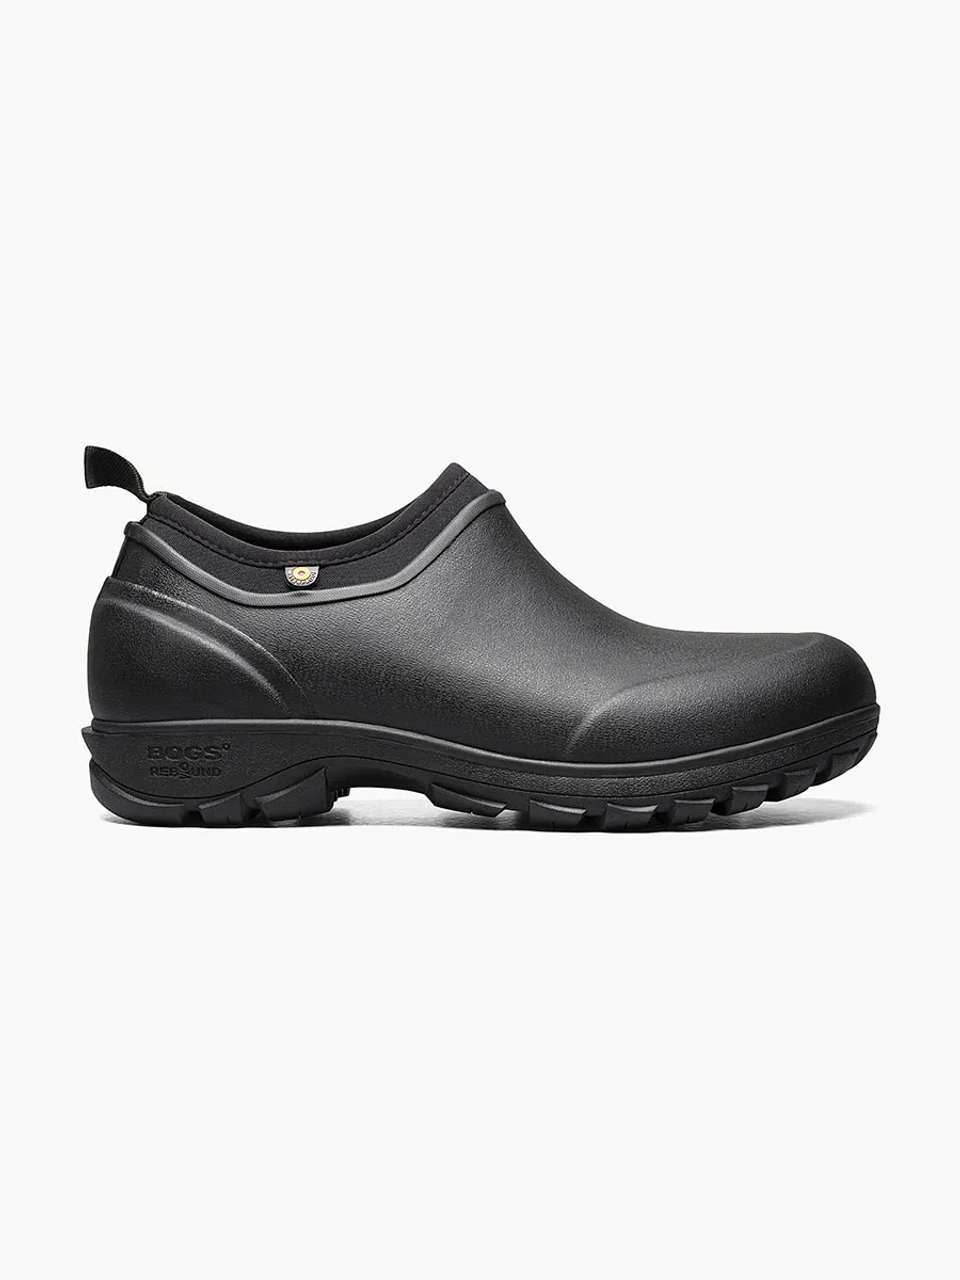 Men's Bogs Sauvie Slip-On Shoe - Herbert's Boots and Western Wear